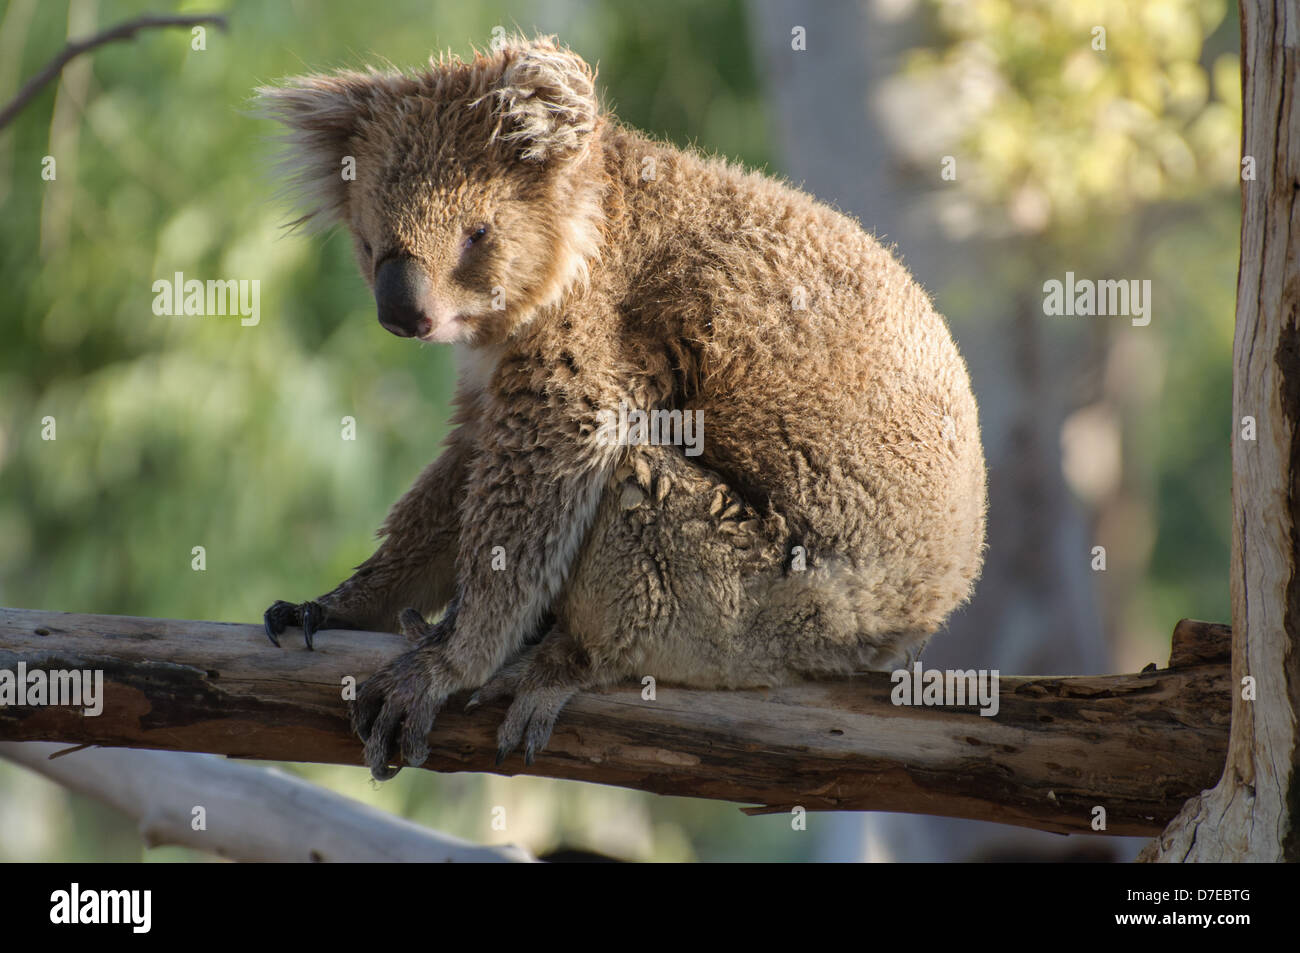 A koala sitting on a eucalyptus branch, in sunlight Stock Photo